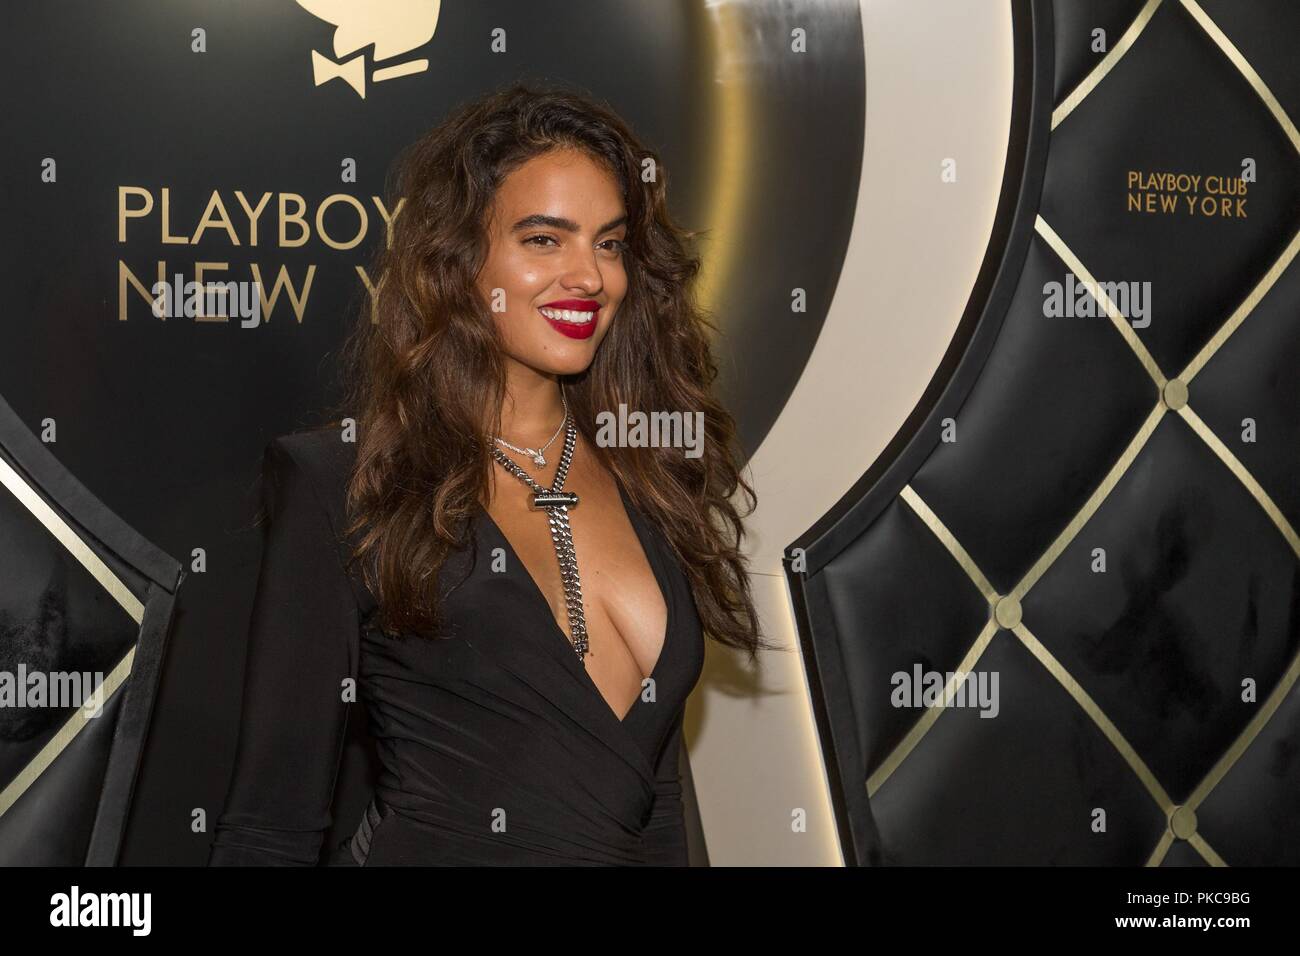 Playboy nina Nina Agdal